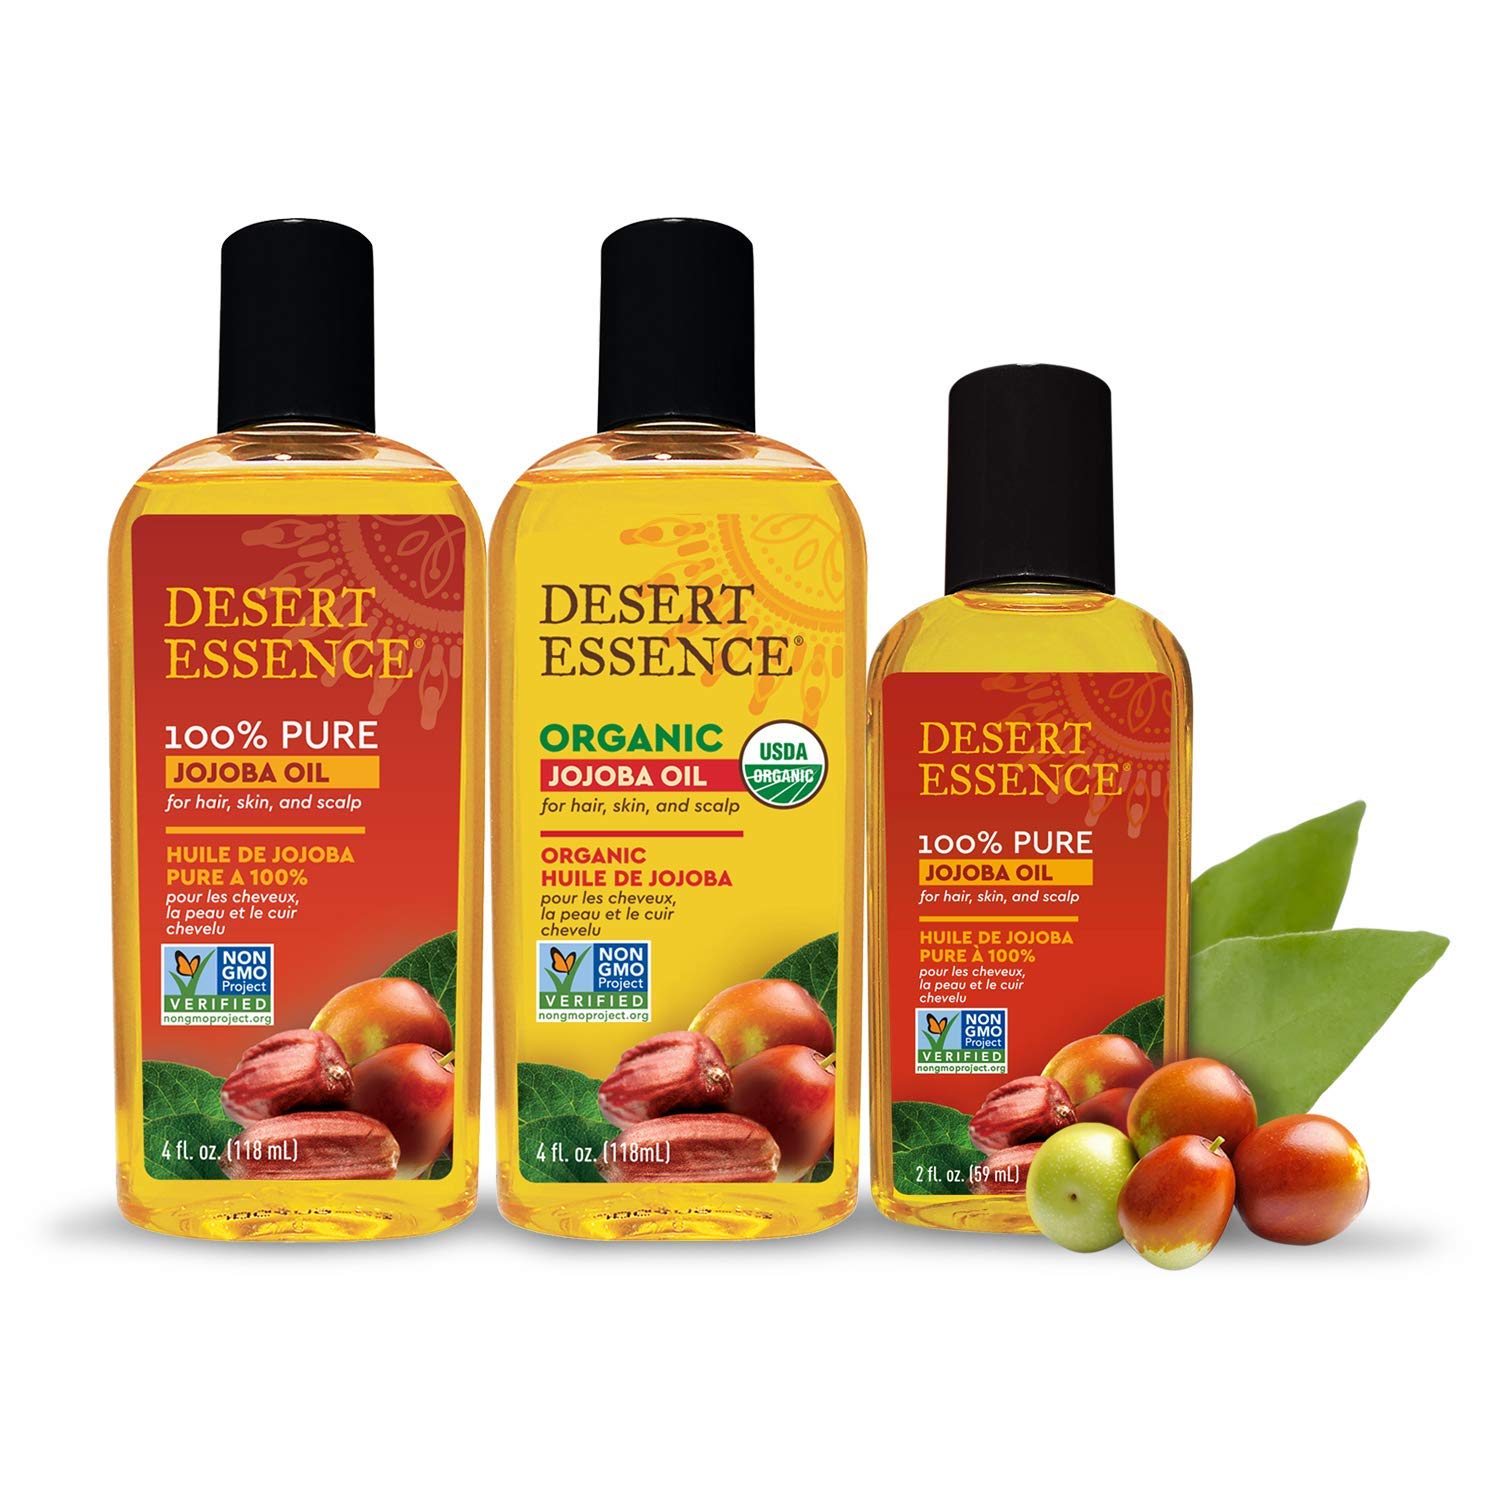 Desert Essence 100% Pure Jojoba Oil - 2 oz - Moisturizes Body Skin & Cleanses Clogged Pores -Nourishes Hair and Scalp - Hair Care & Skincare Essential Oil - Suitable for Sensitive Skin